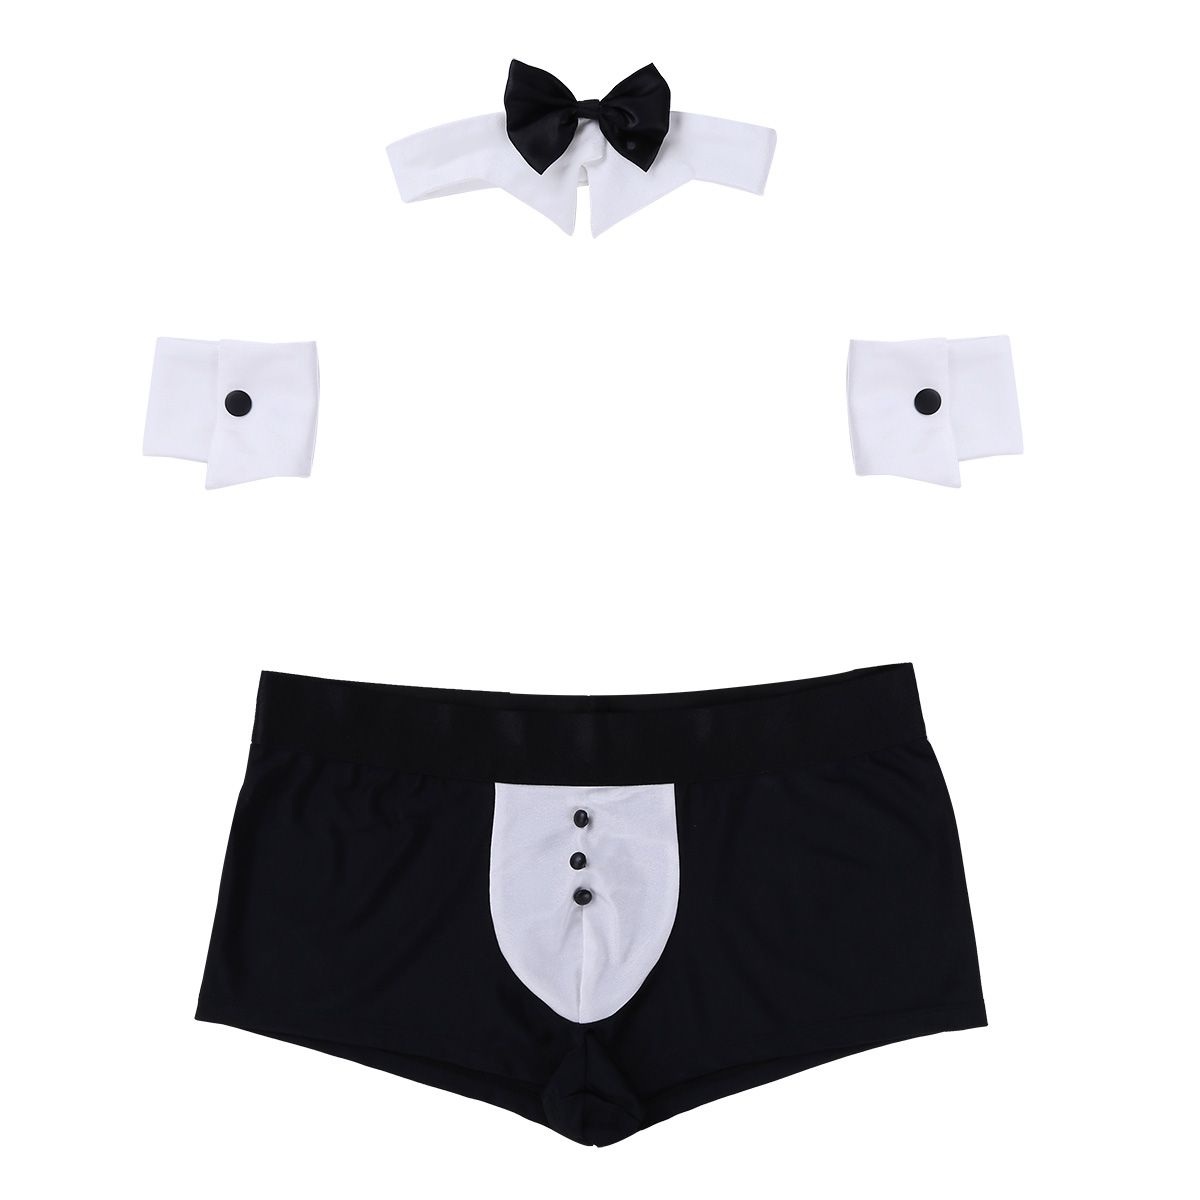 YOOJIA Mens Waiter Tuxedo Lingerie Set Bowtie Suspender G-String Underwear with Bracelets